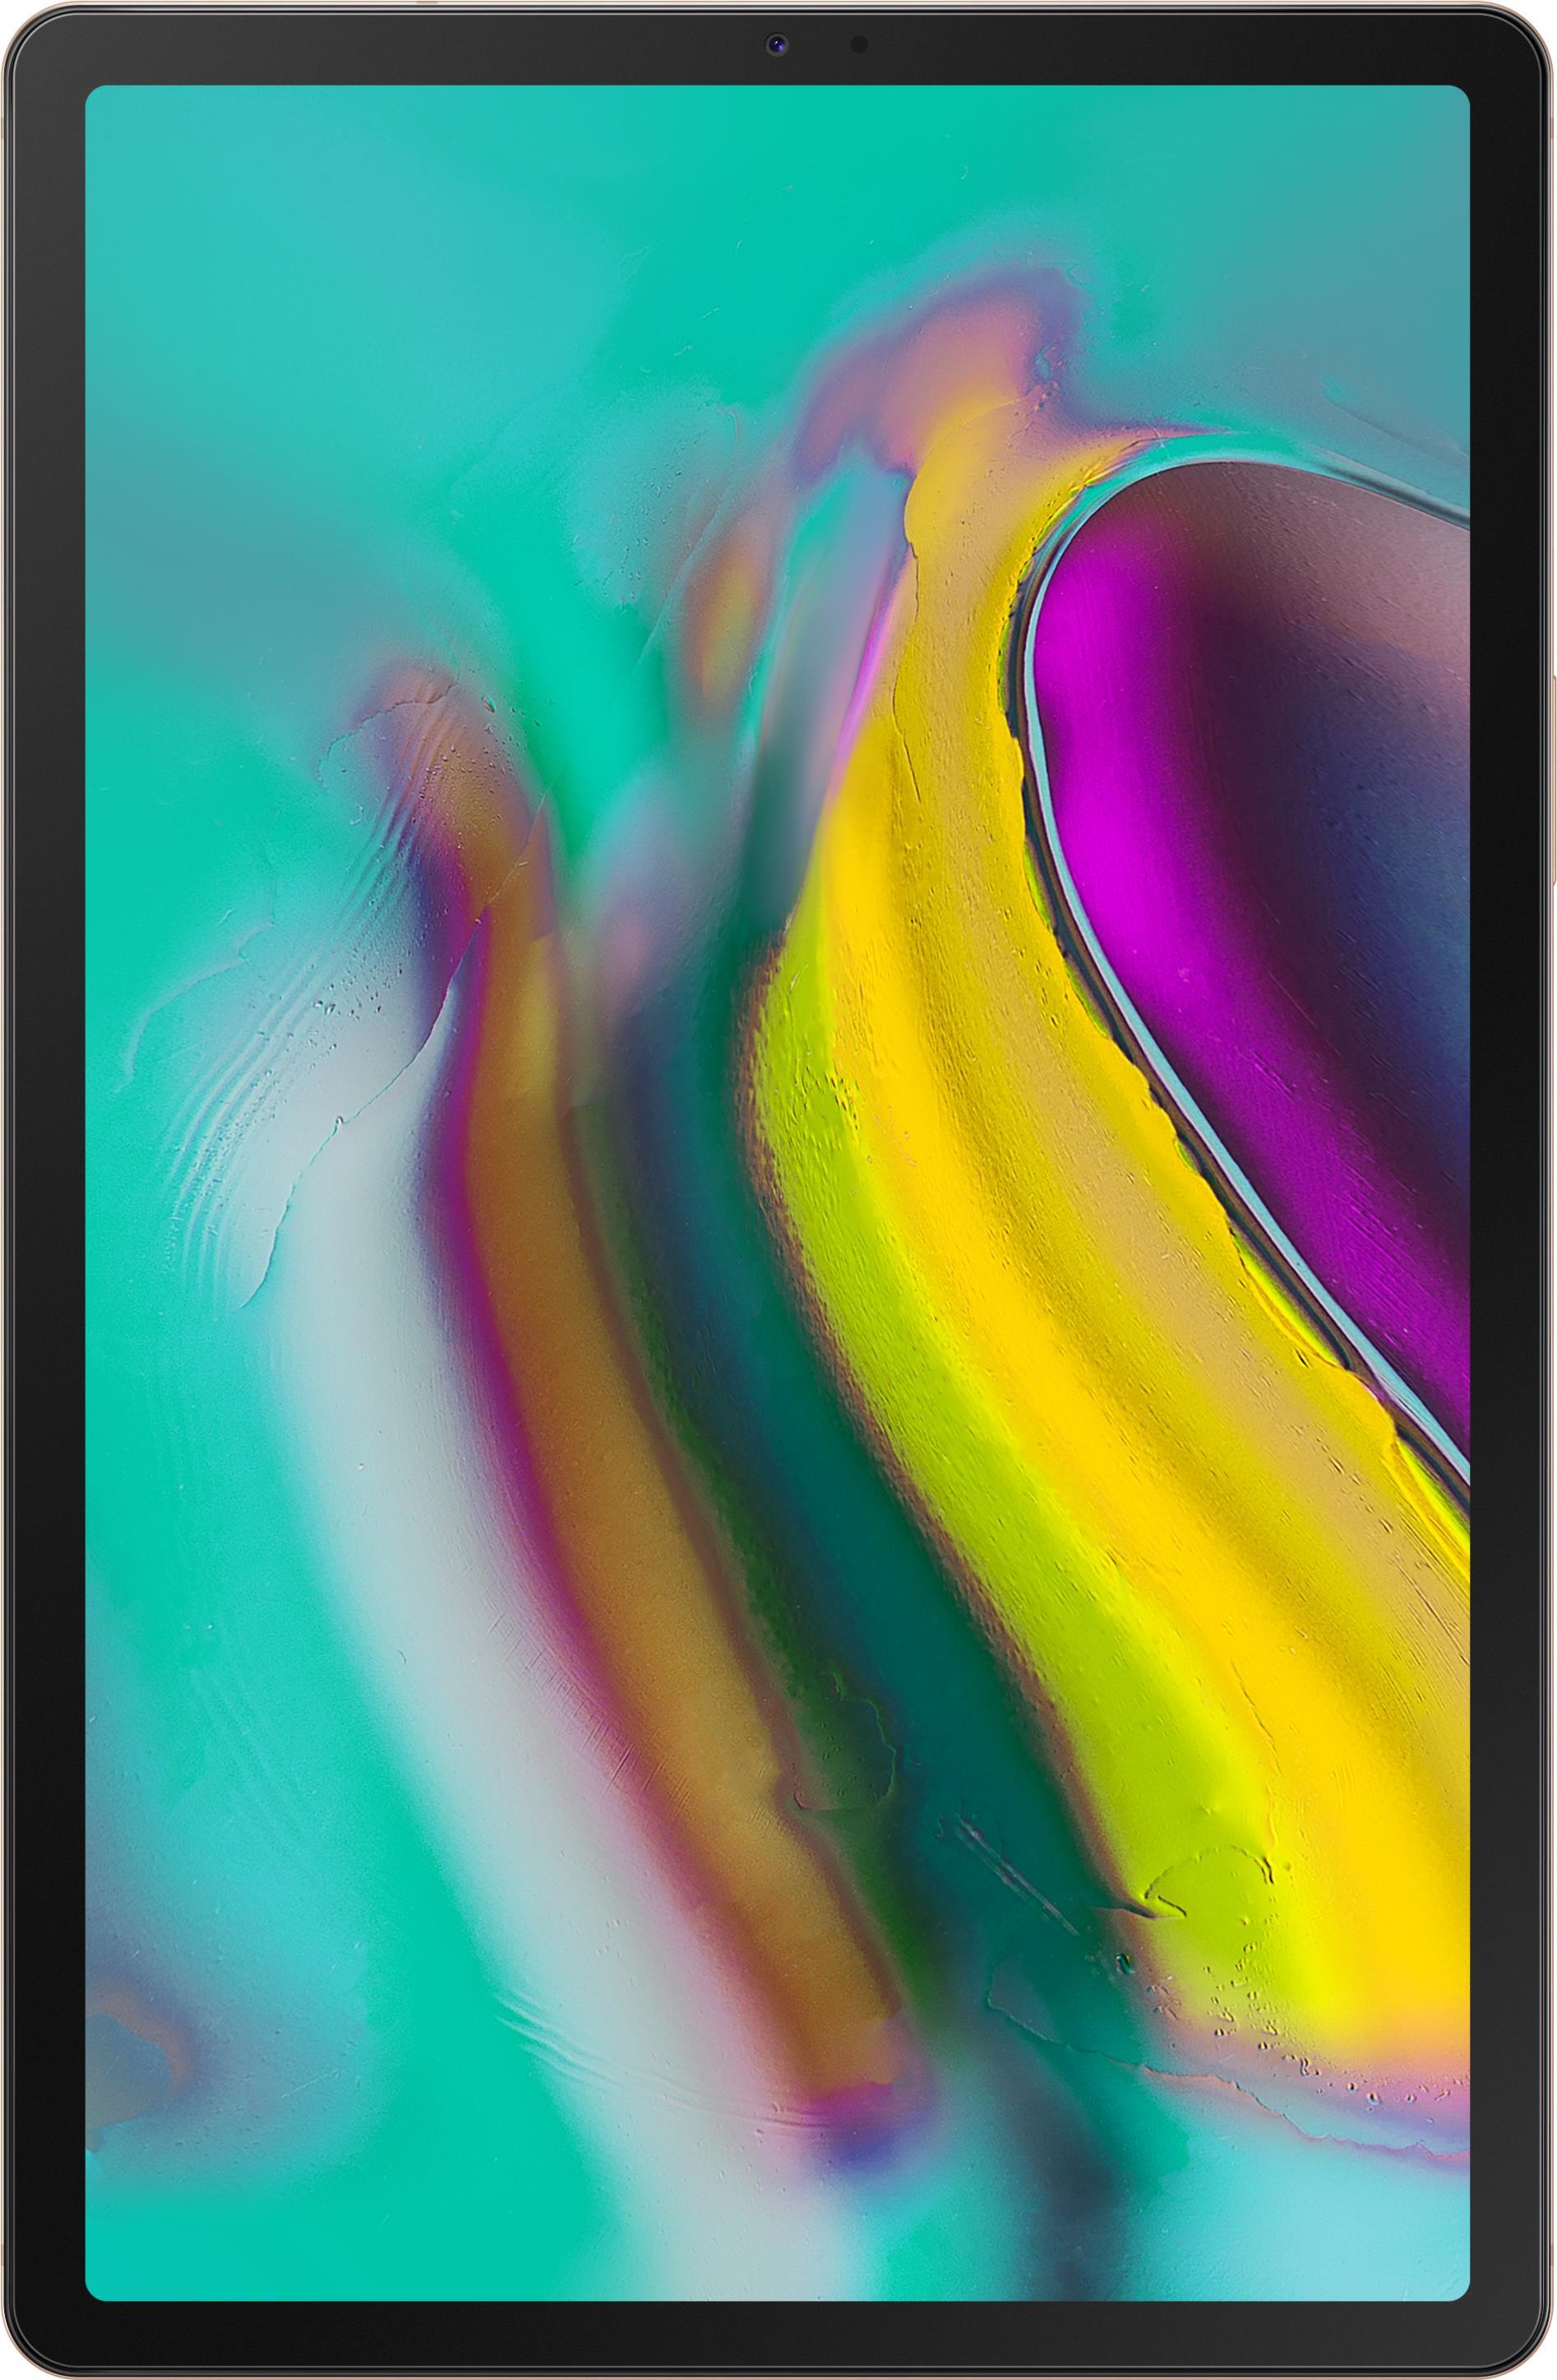 Samsung Galaxy Tab S5e - Tablet - Android 9.0 (Pie) - 64 GB - 26.7 cm (10.5